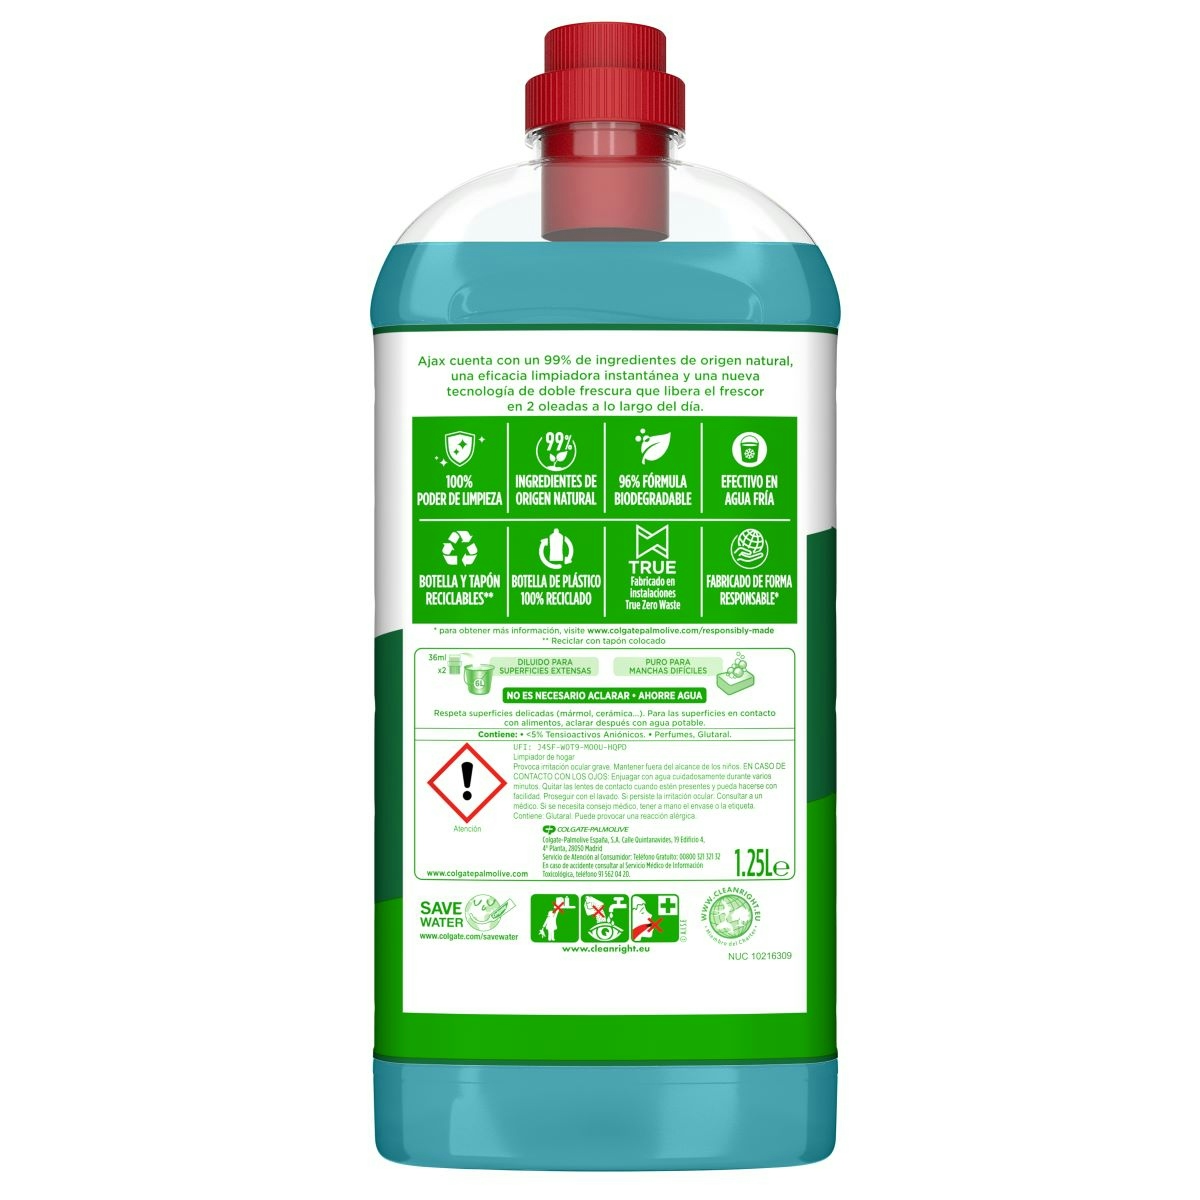 Limpiador pino AJAX botella 1.25 lt